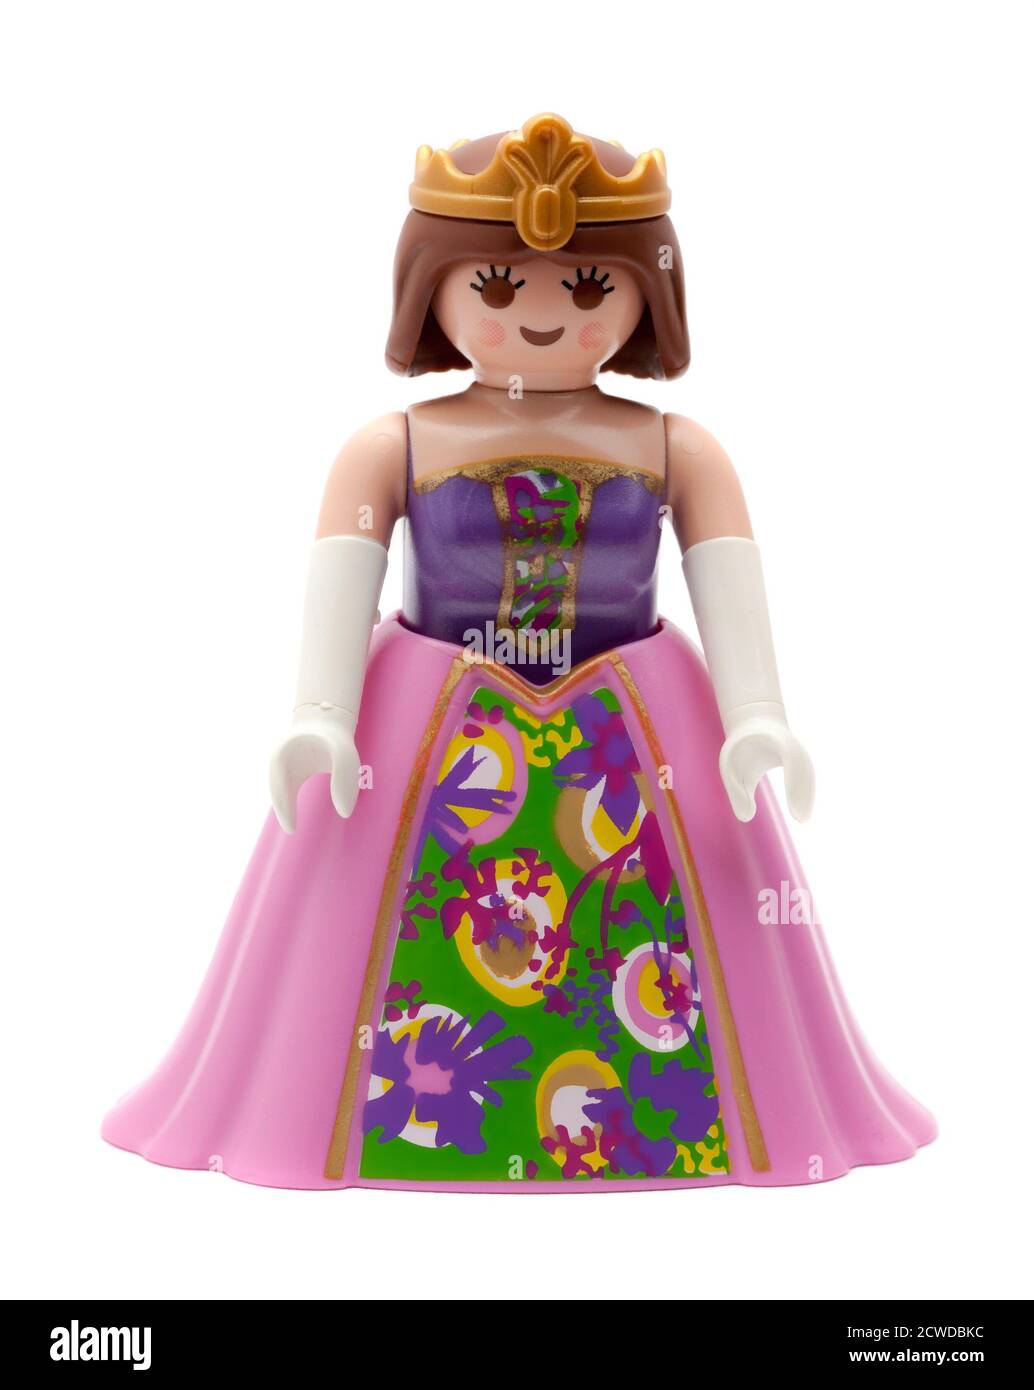 Playmobil princess figurine on white background Stock Photo - Alamy